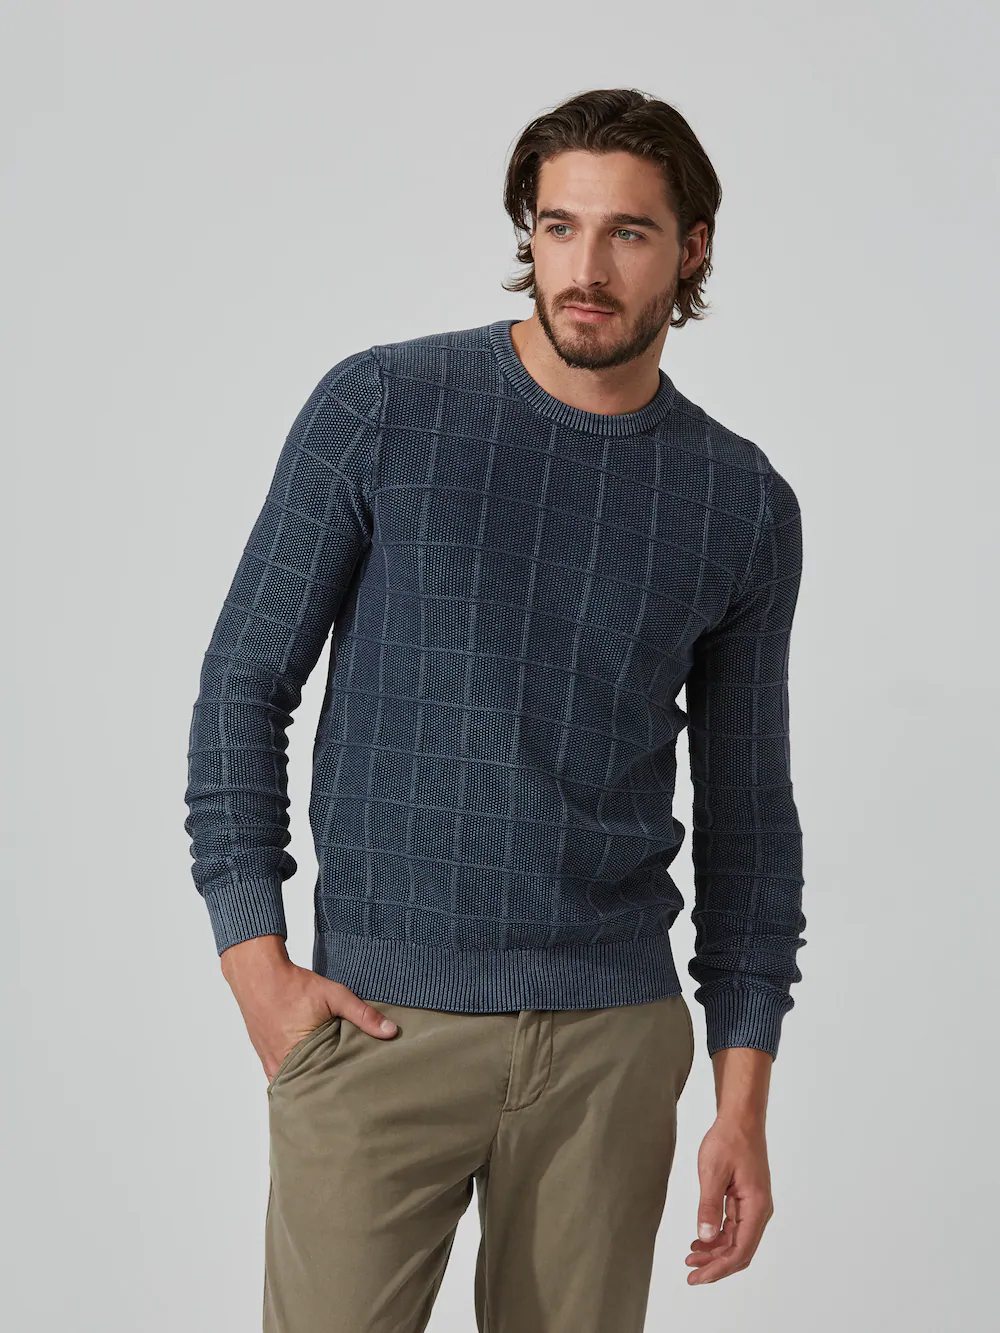 Frank + Oak Stone Washed Cotton Crewneck Sweater In Navy | ModeSens